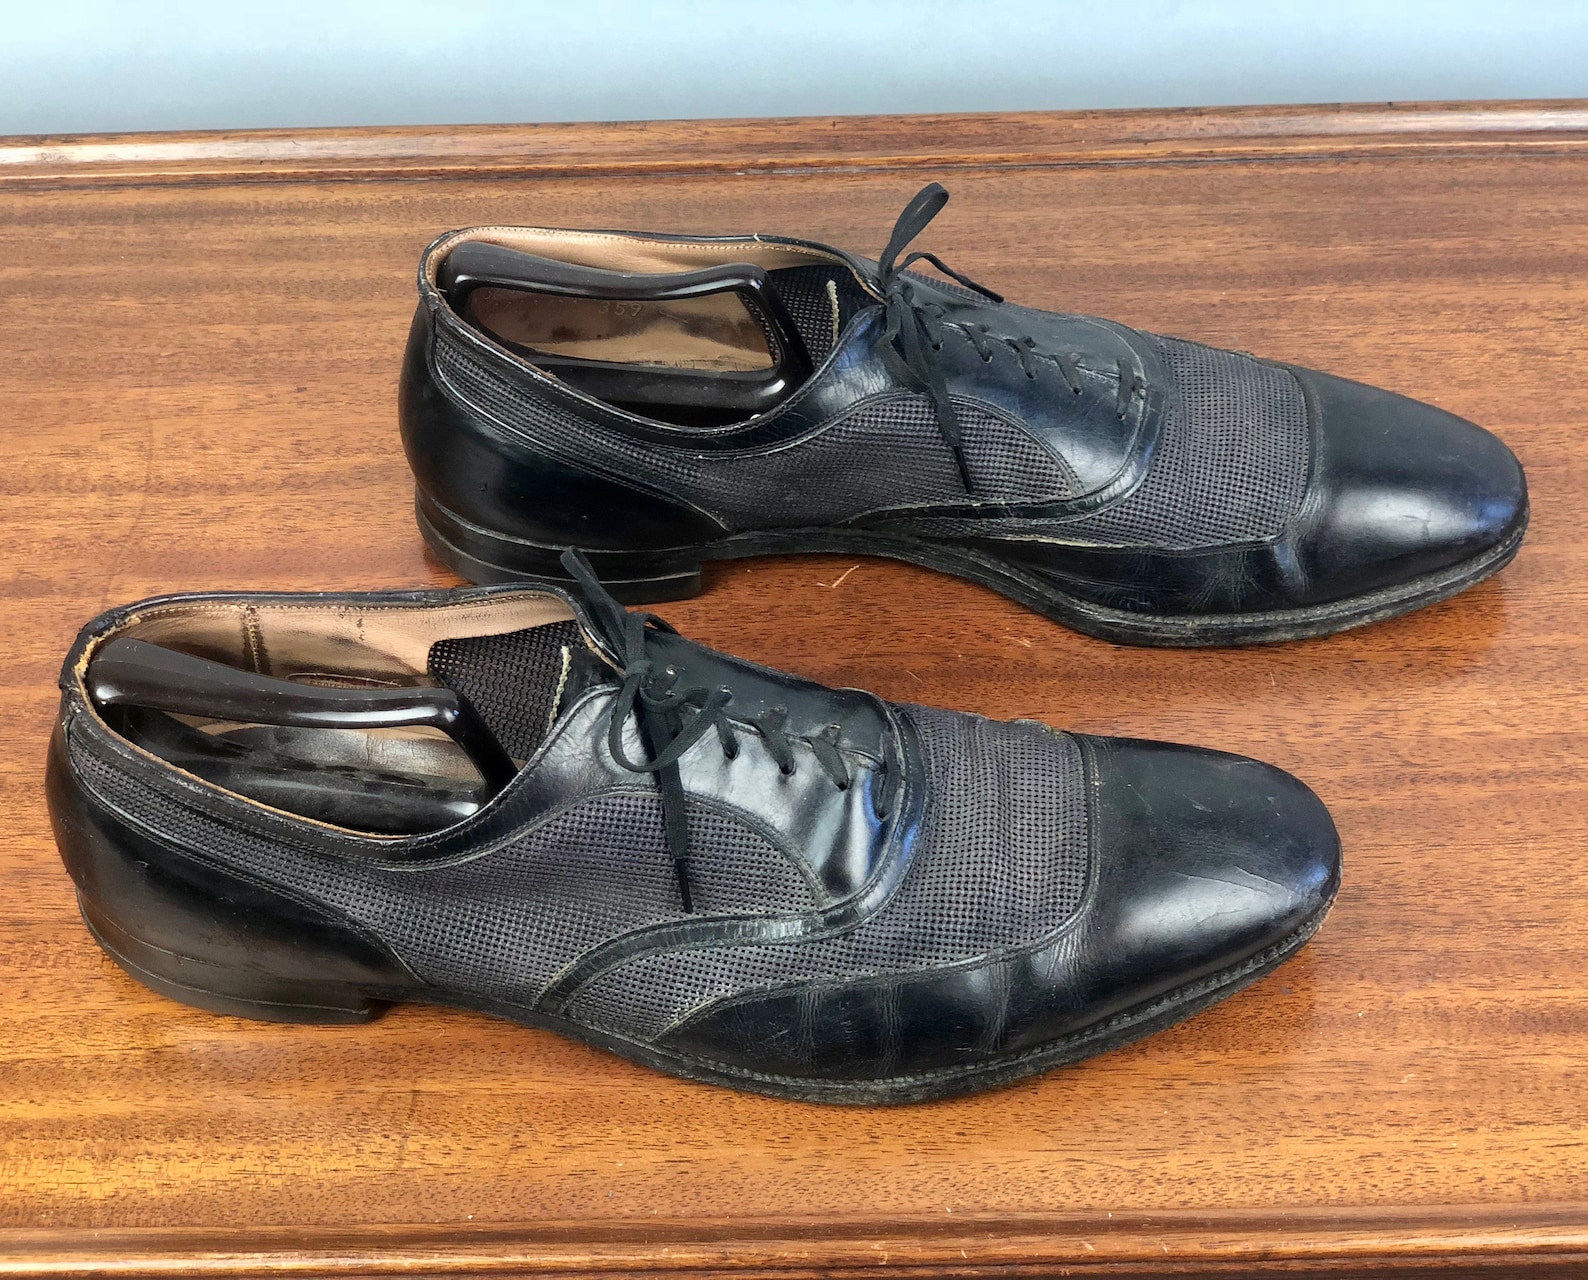 1940s Ventilated Mens Shoes Vintage 40s Black Apron Toe | Etsy